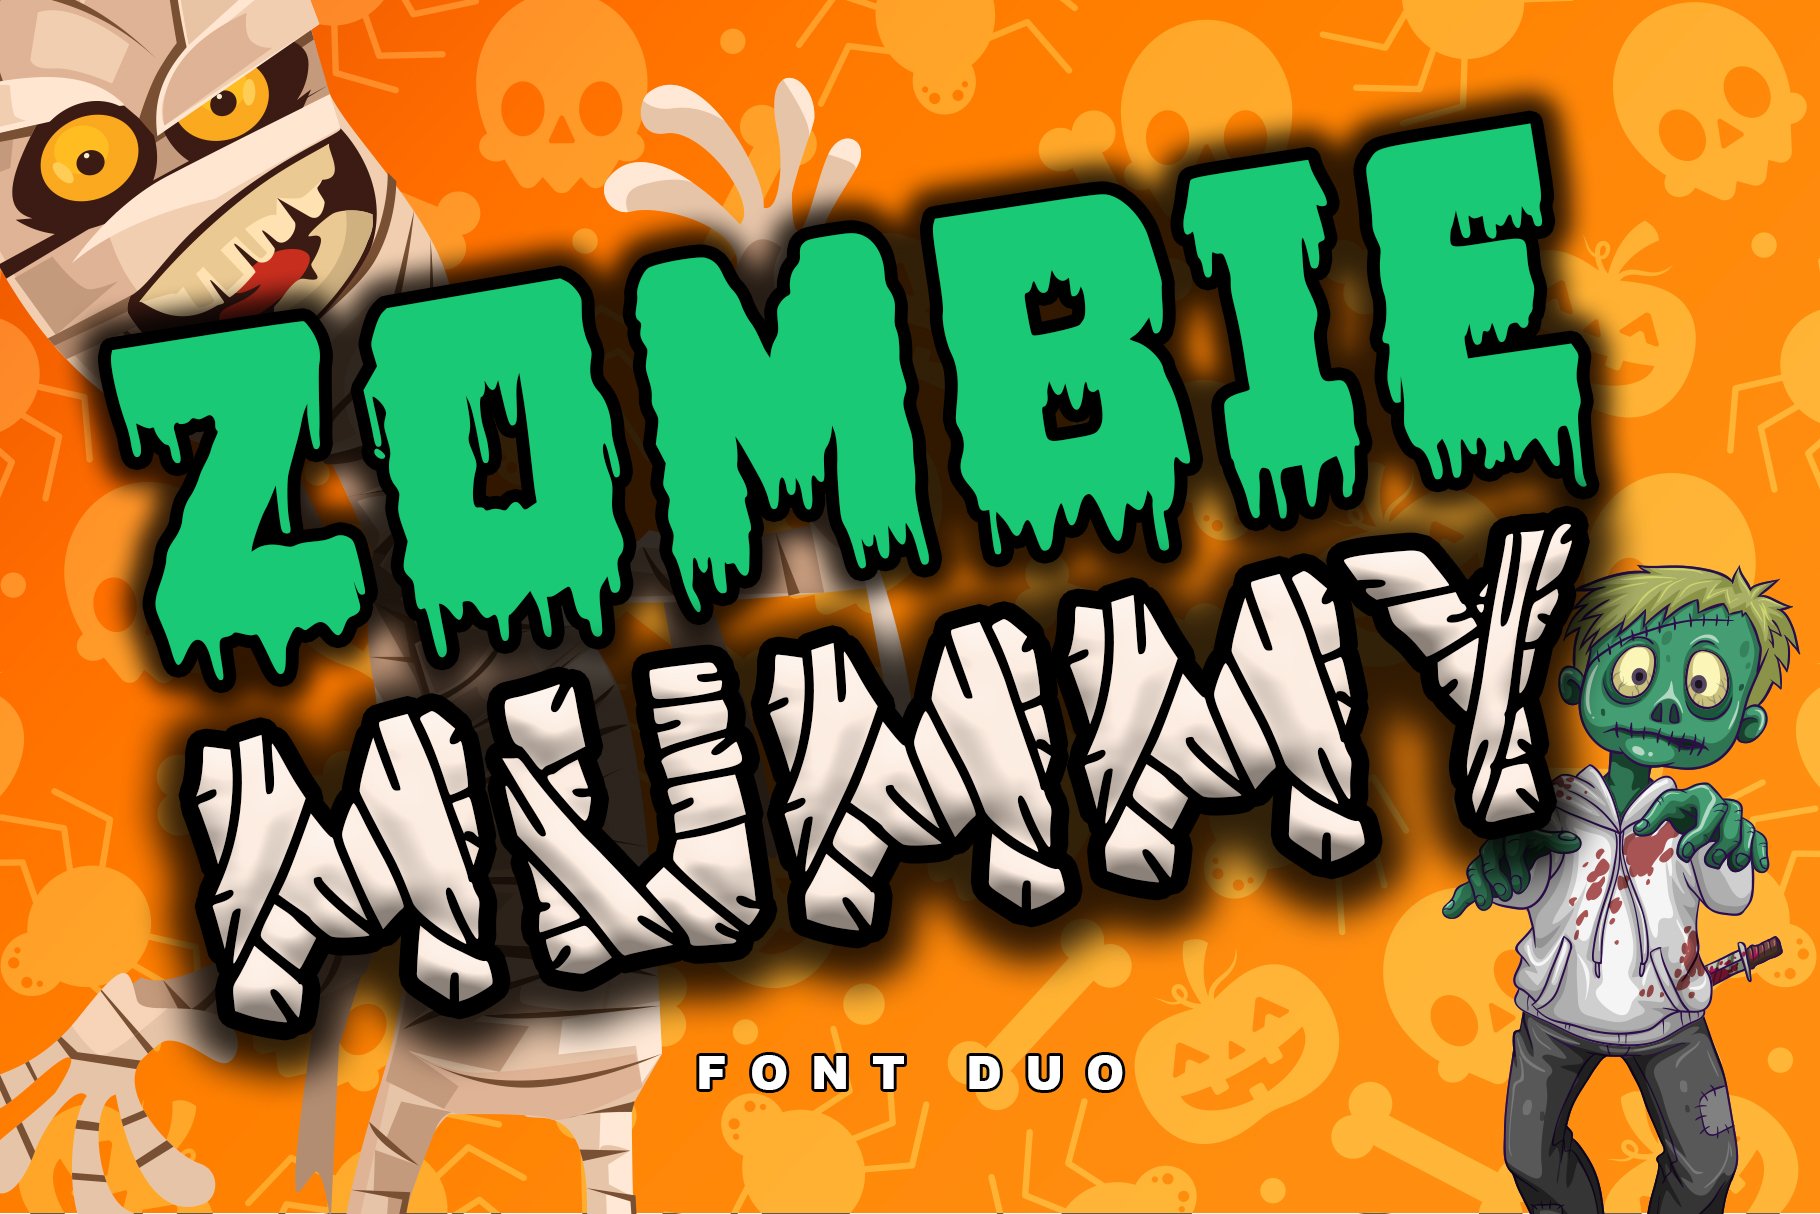 Zombie Mummy cover image.